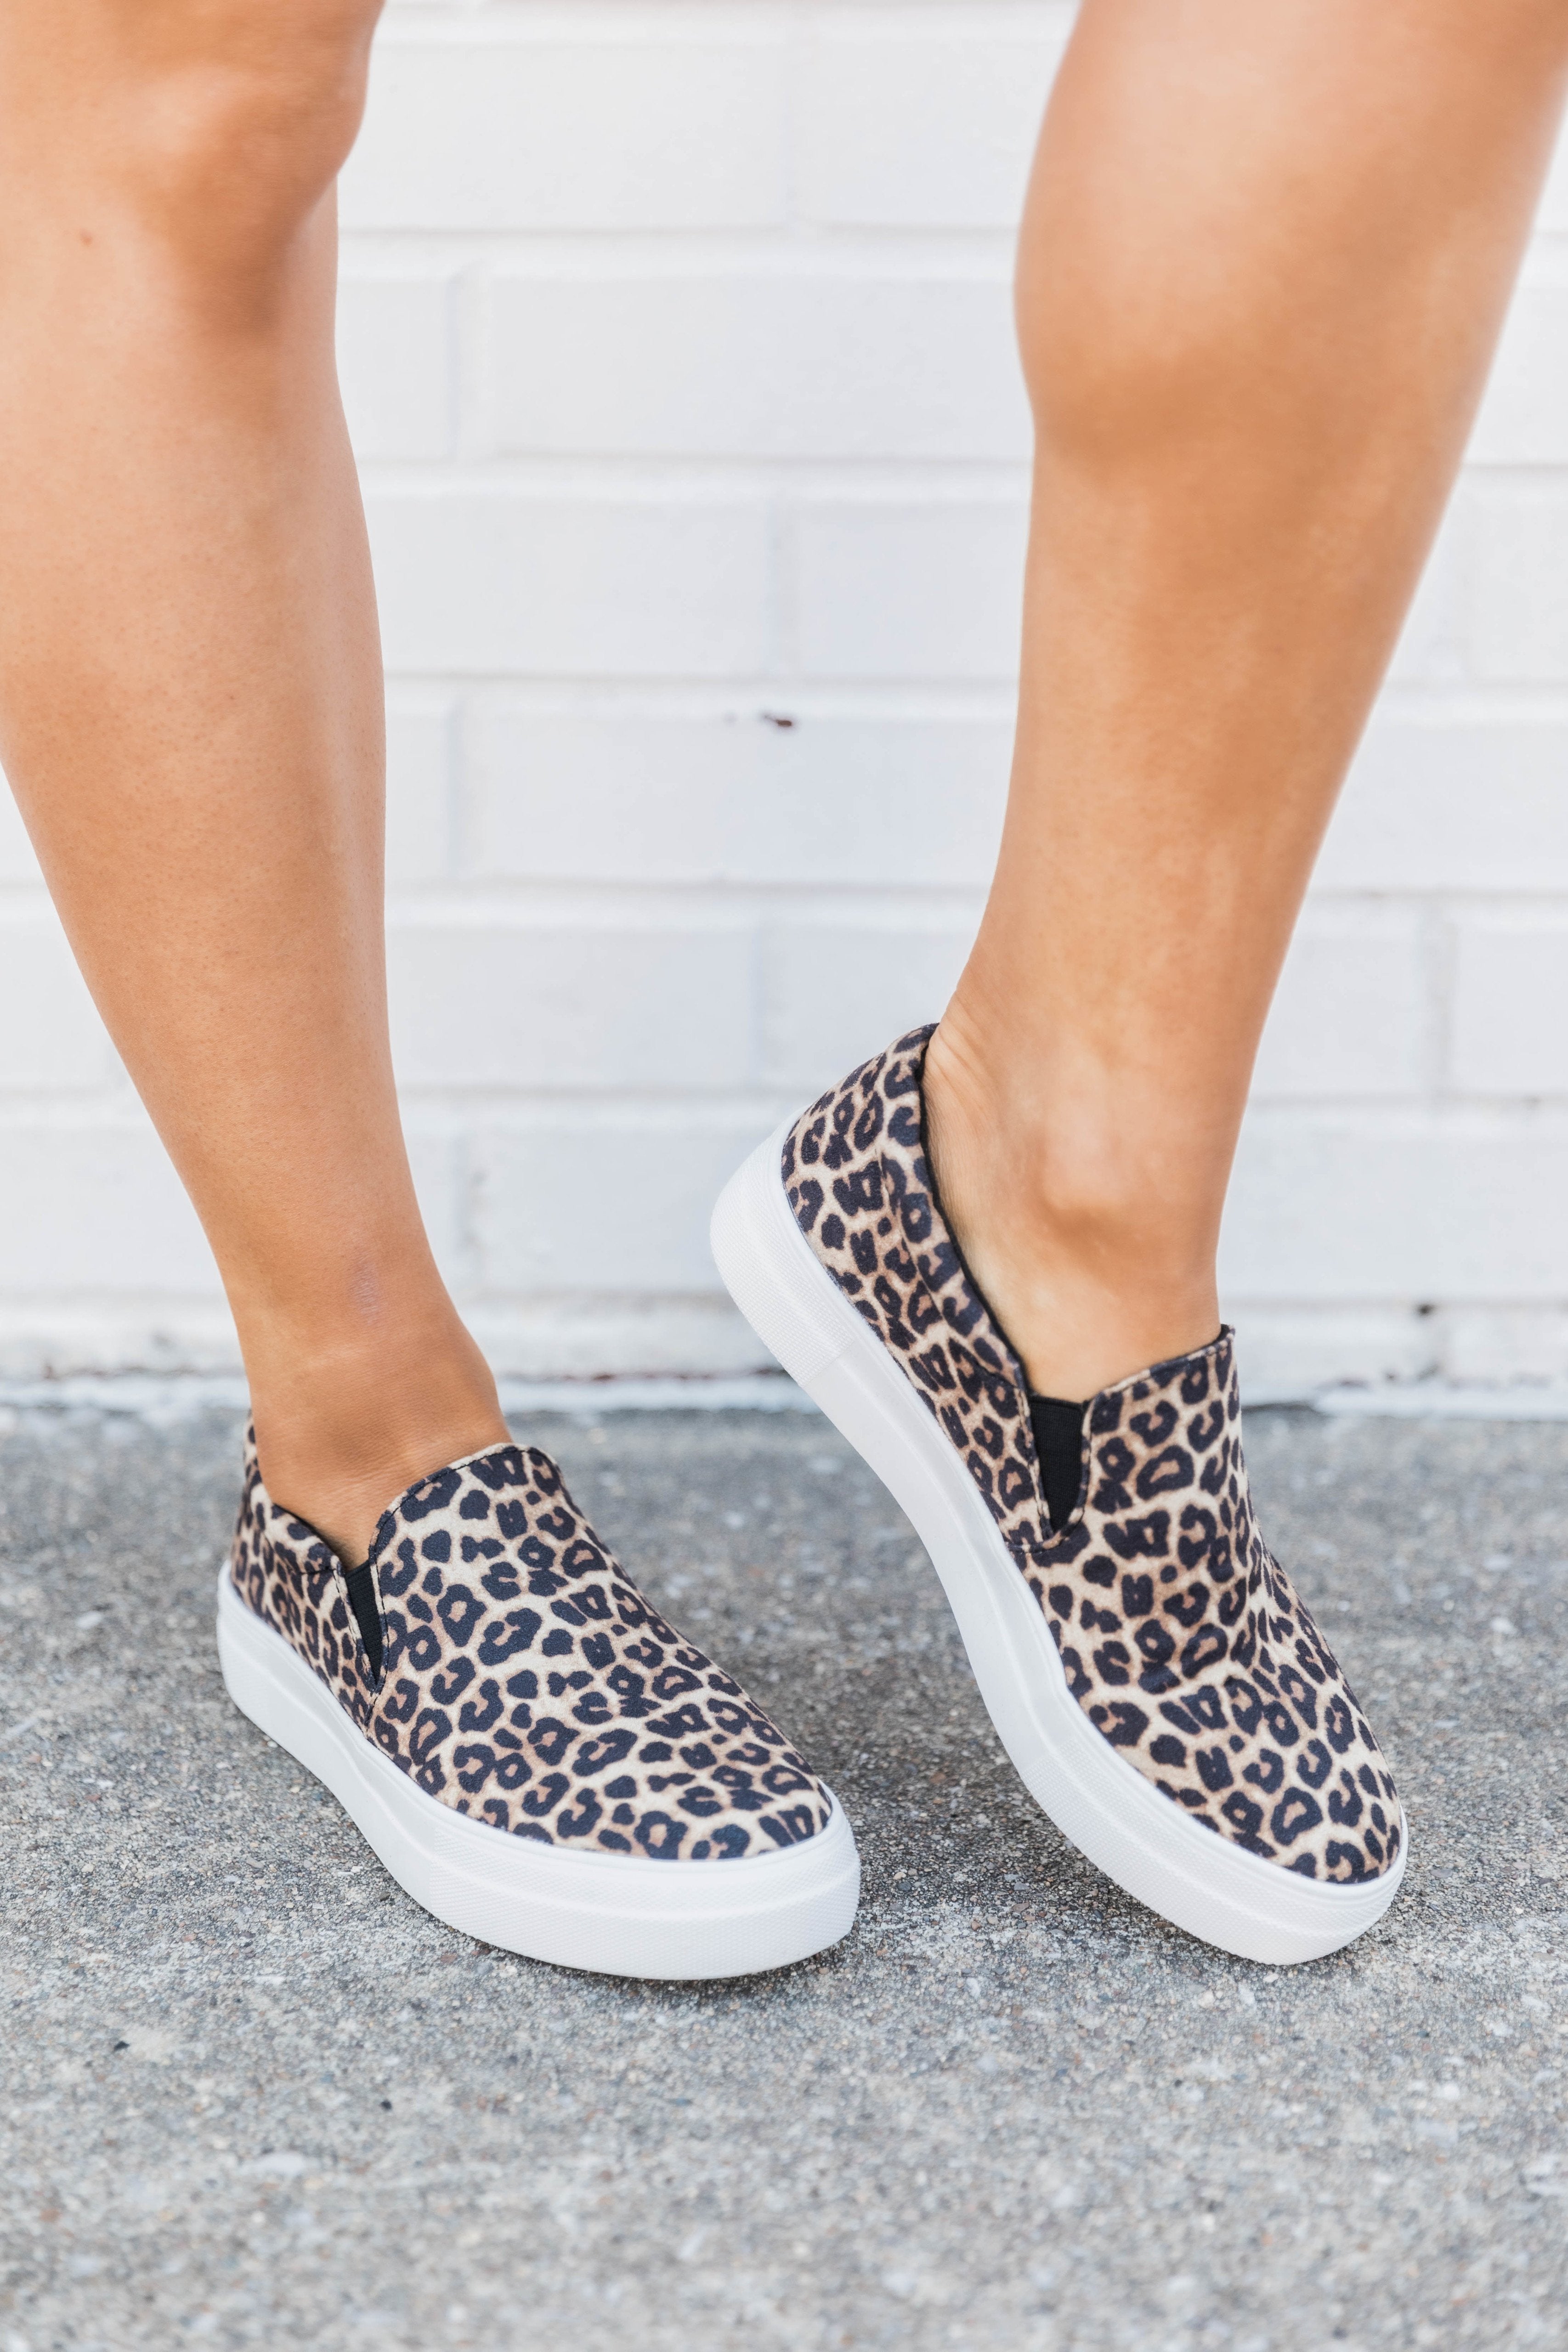 The Abigail Cheetah Sneakers